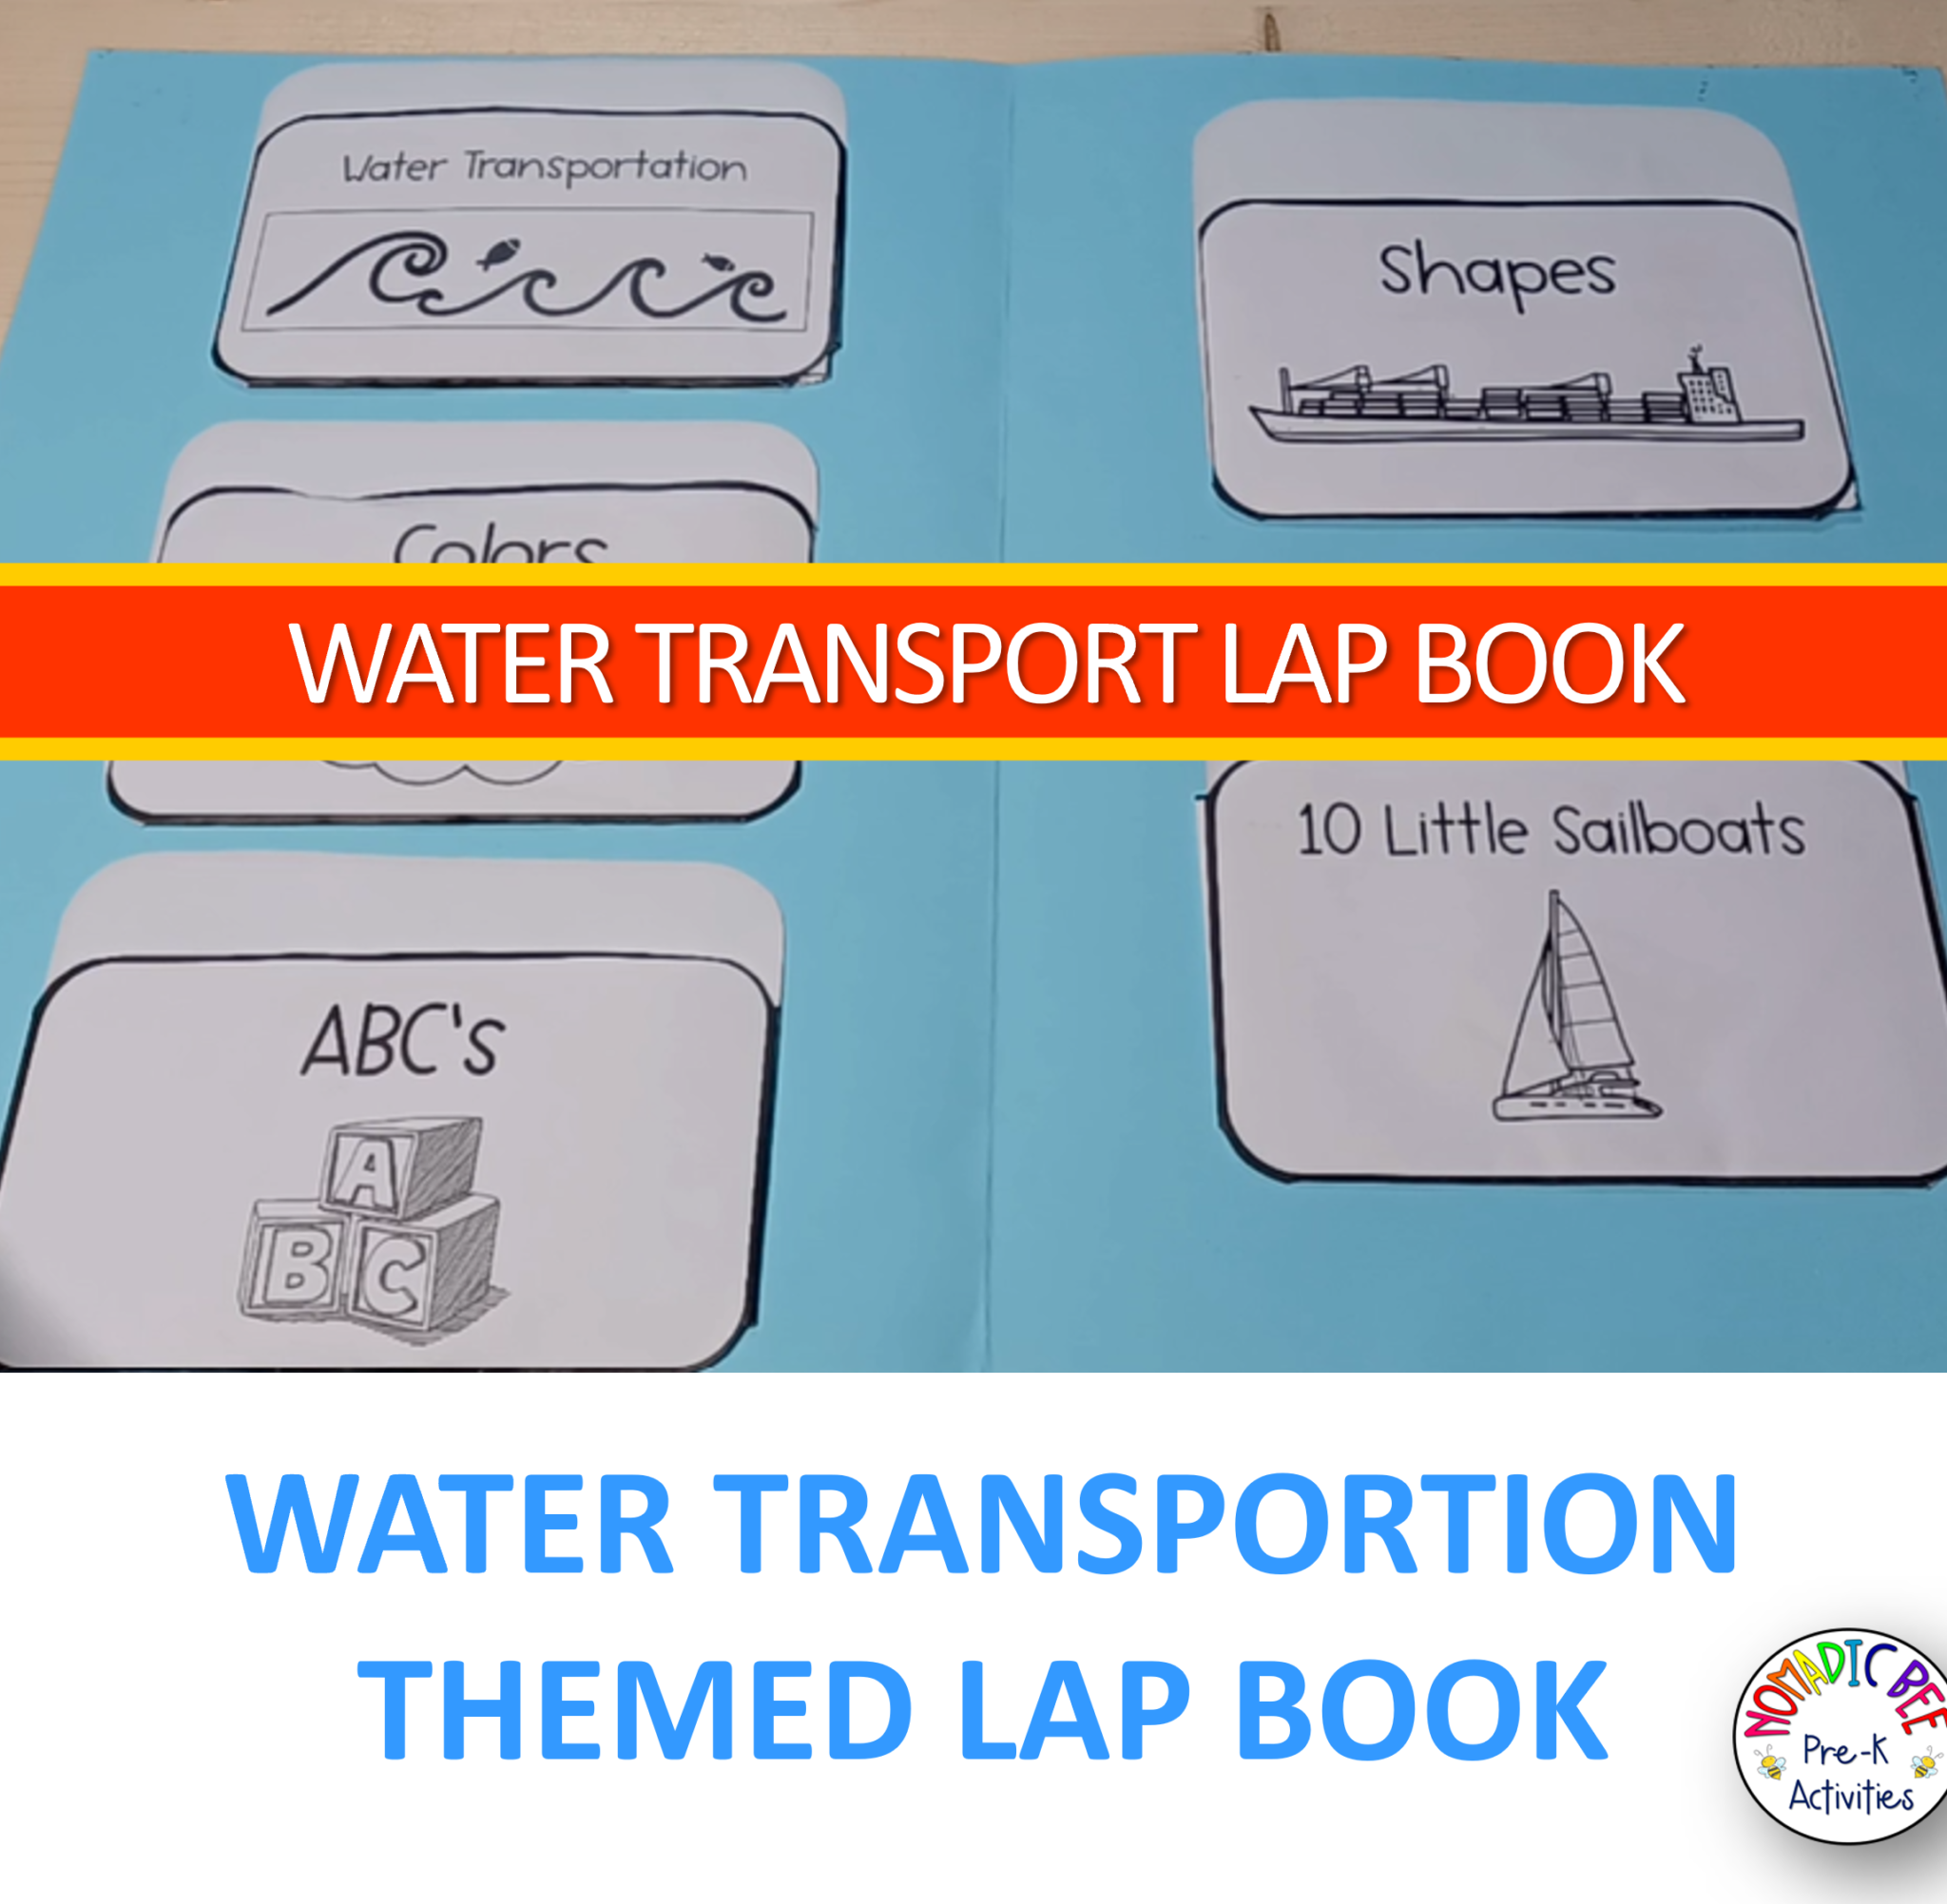 Water Transportation Themed Lap Book